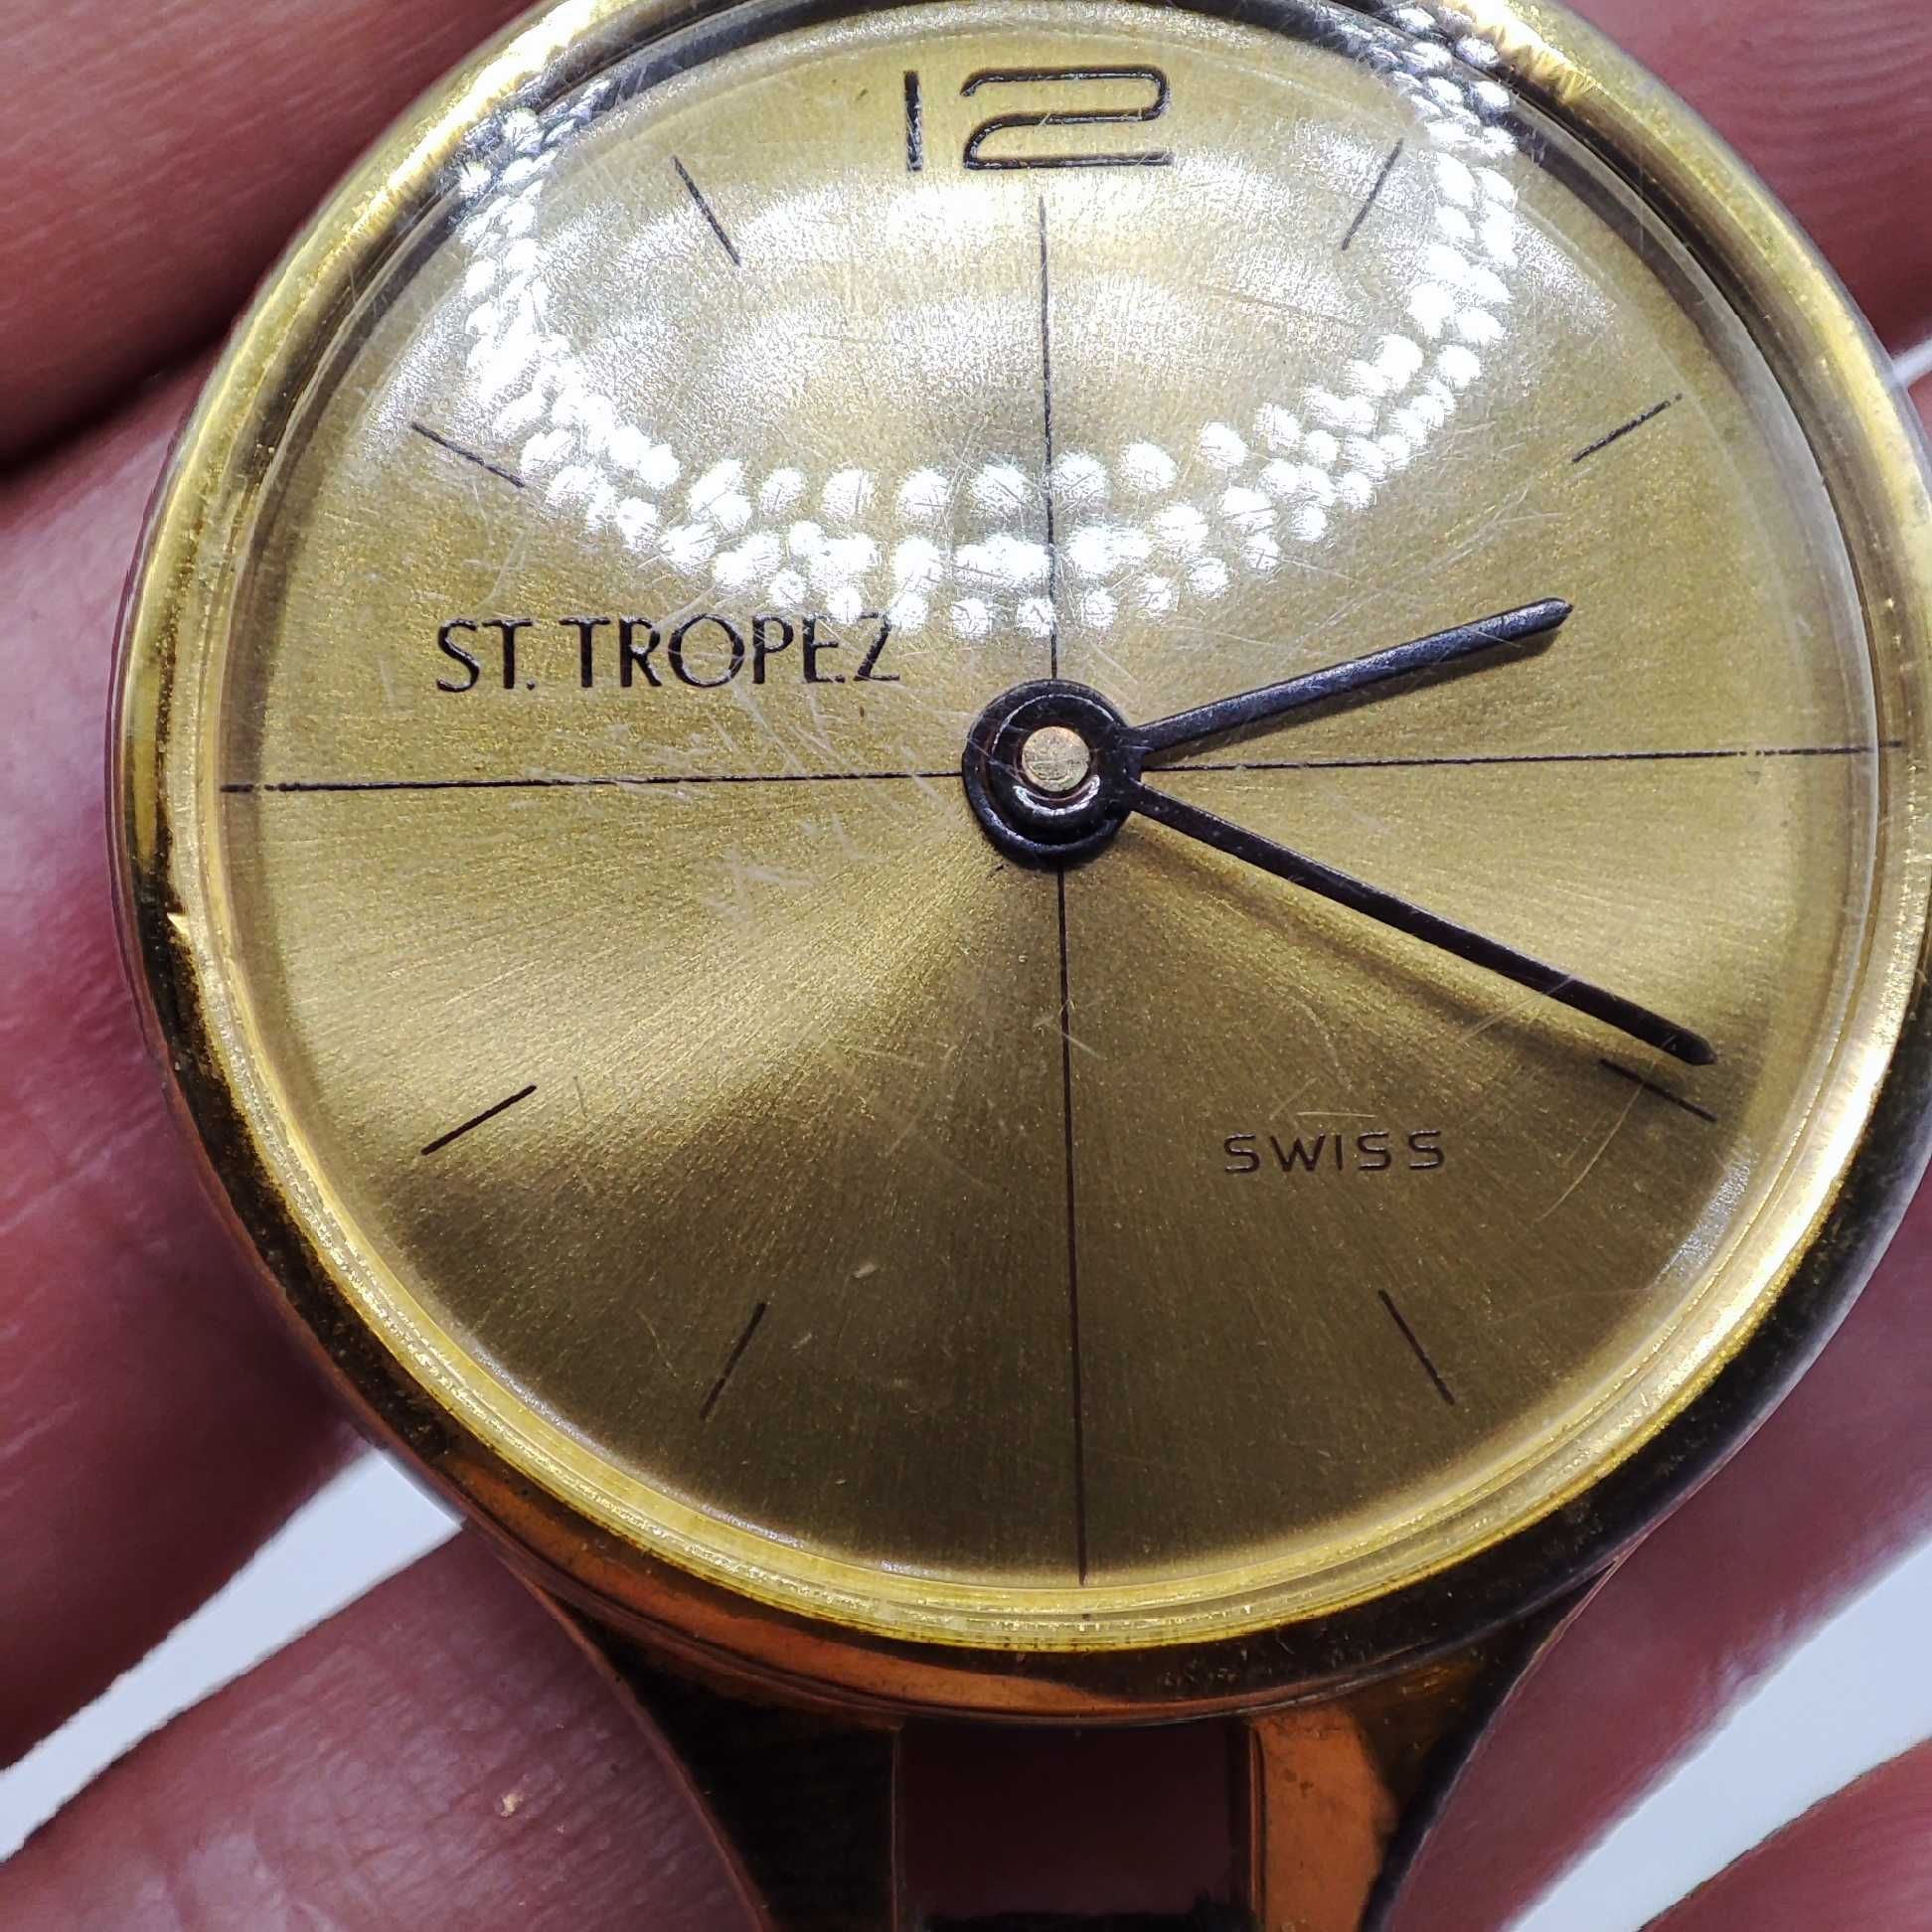 Damski zegarek ST.Tropez